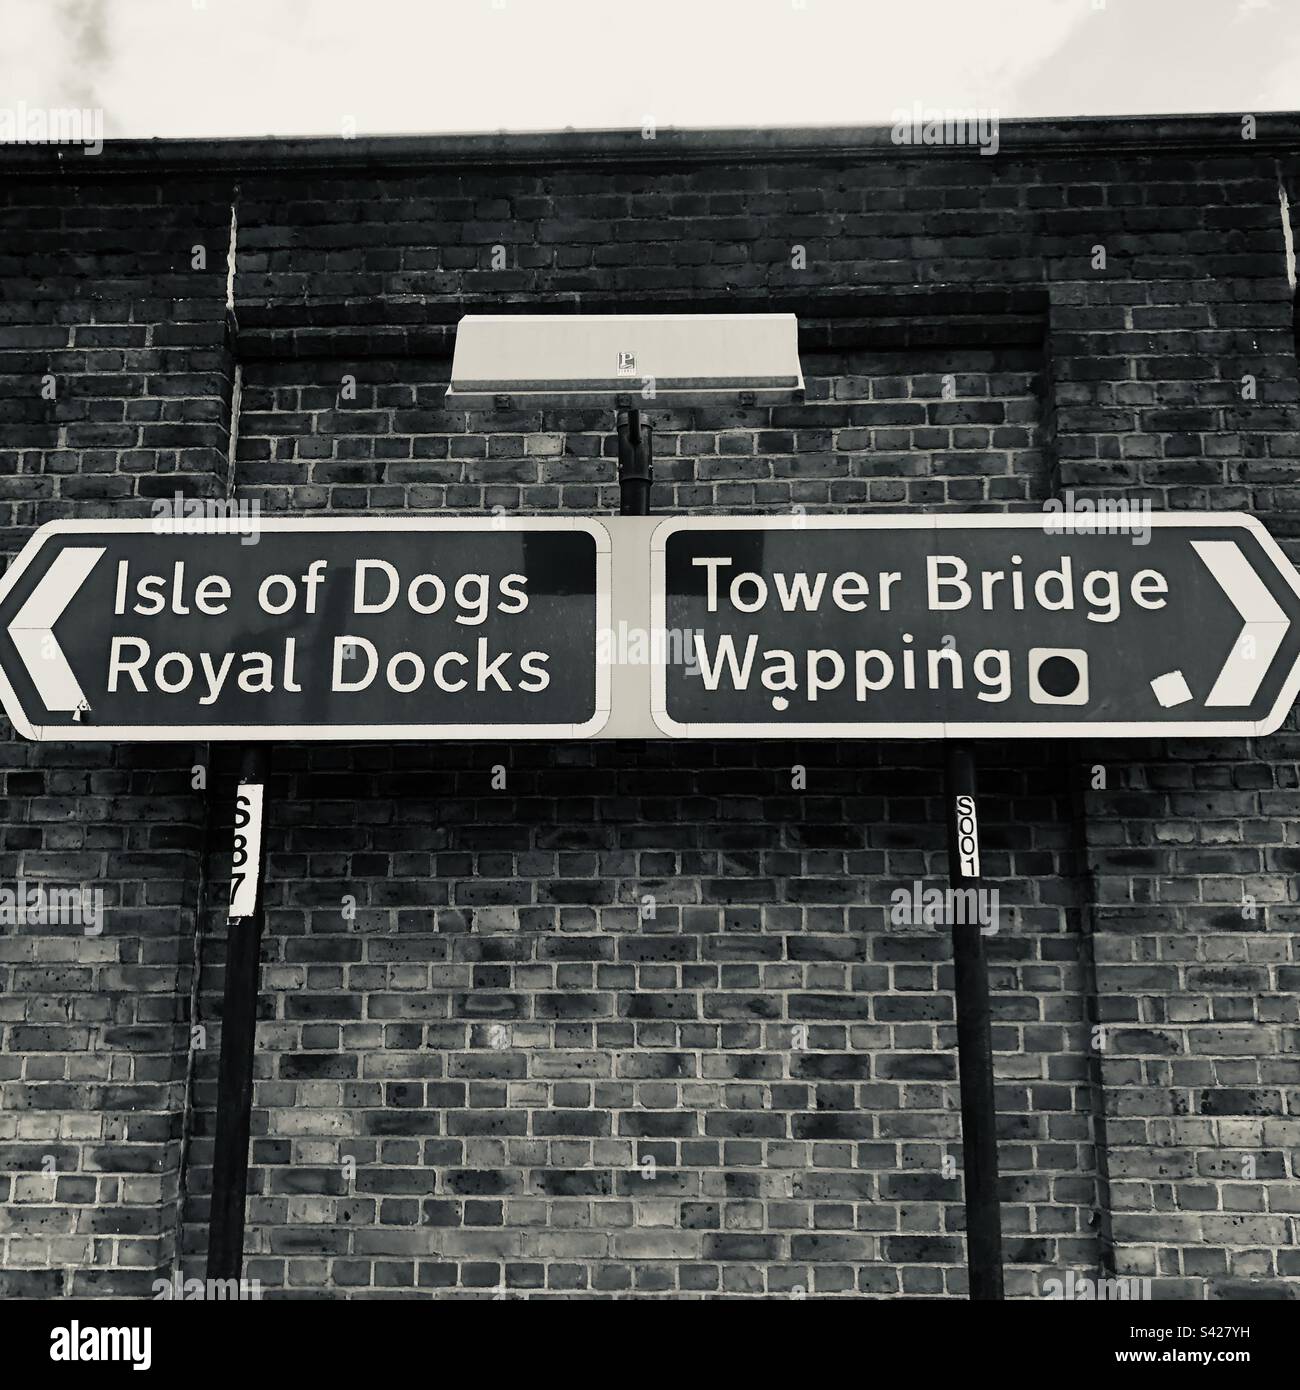 Indicazioni per Tower Bridge Wapping e Isle of Dogs Royal Docks London Foto Stock